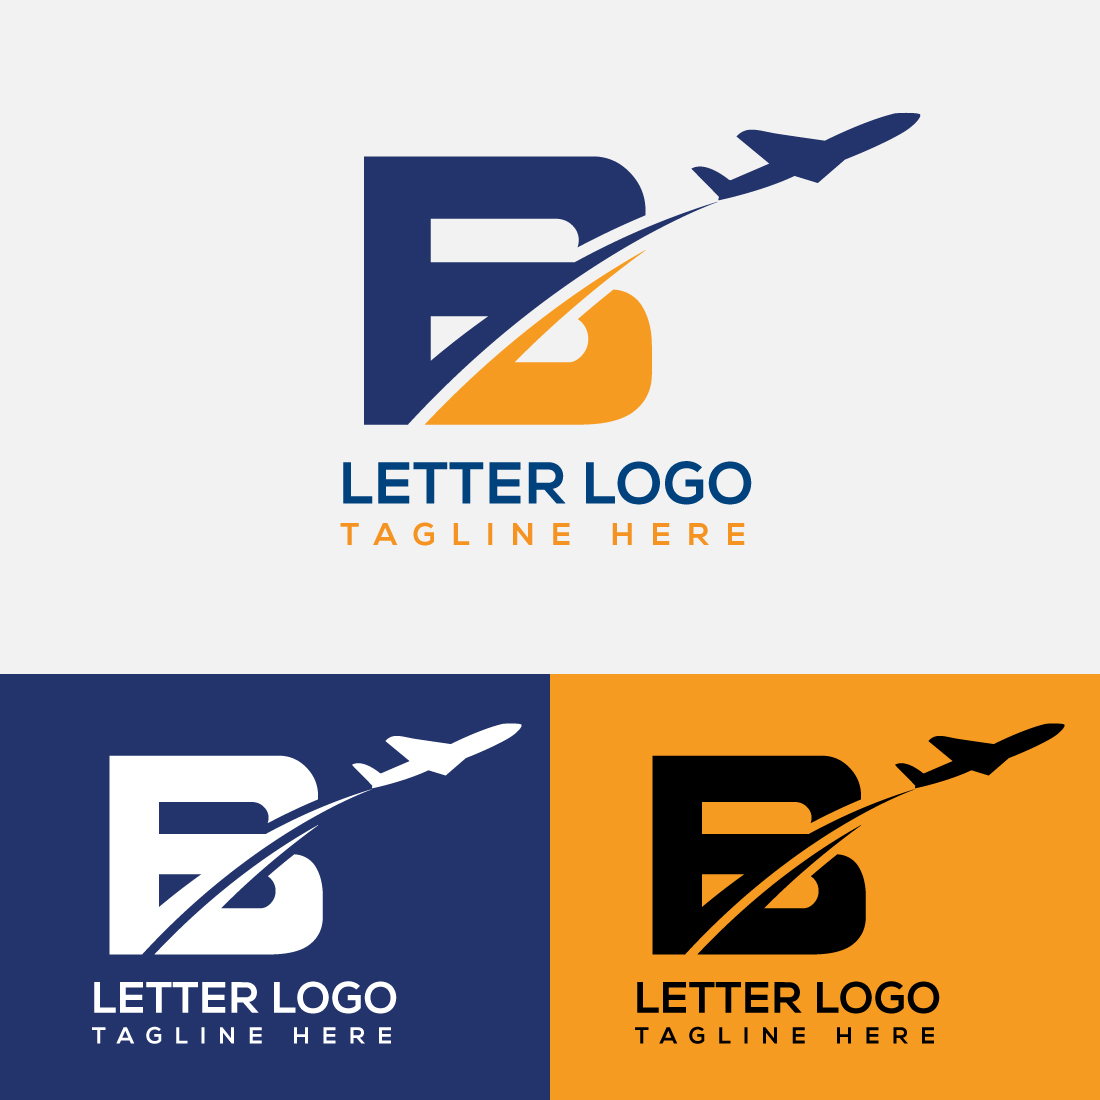 Letter B Airplane Logo Design cover image.